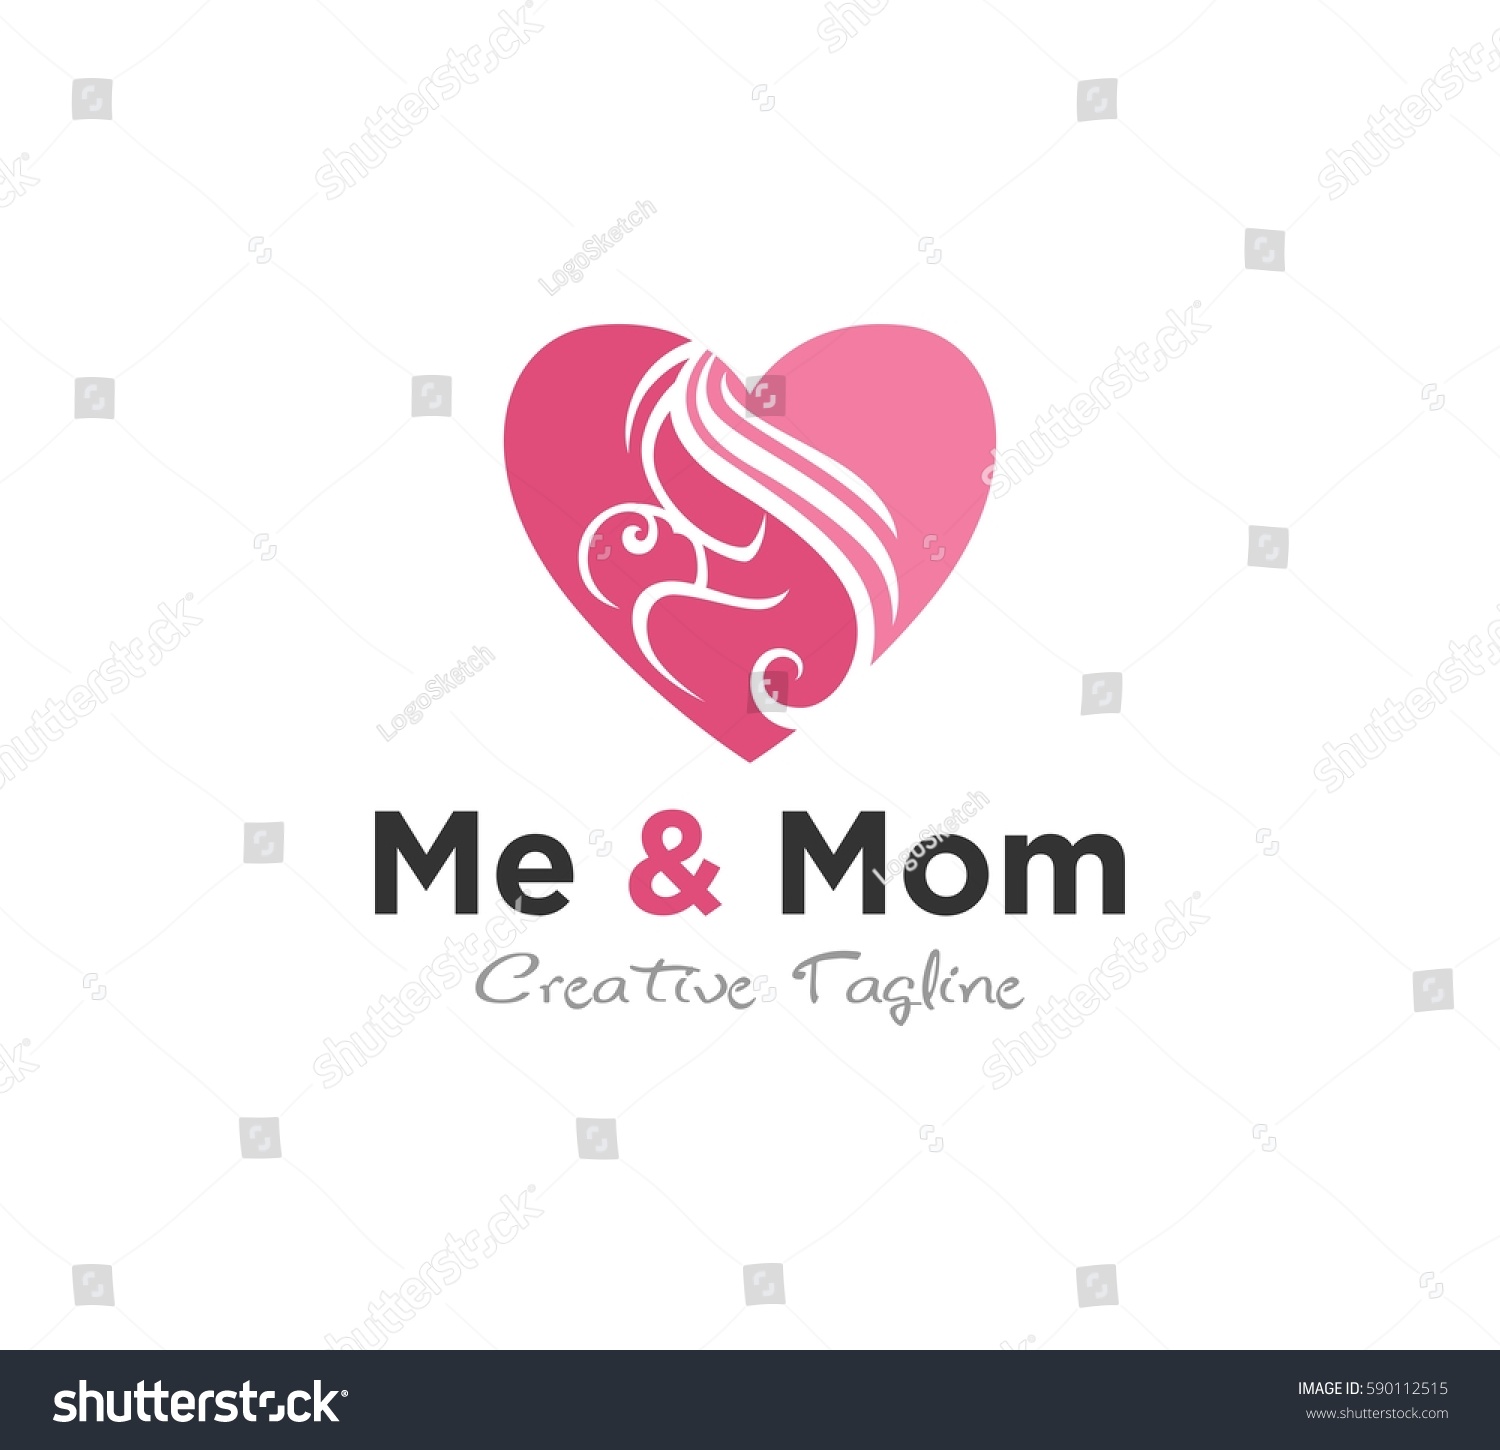 Download Mother Son Logo Template Stock Vector 590112515 - Shutterstock